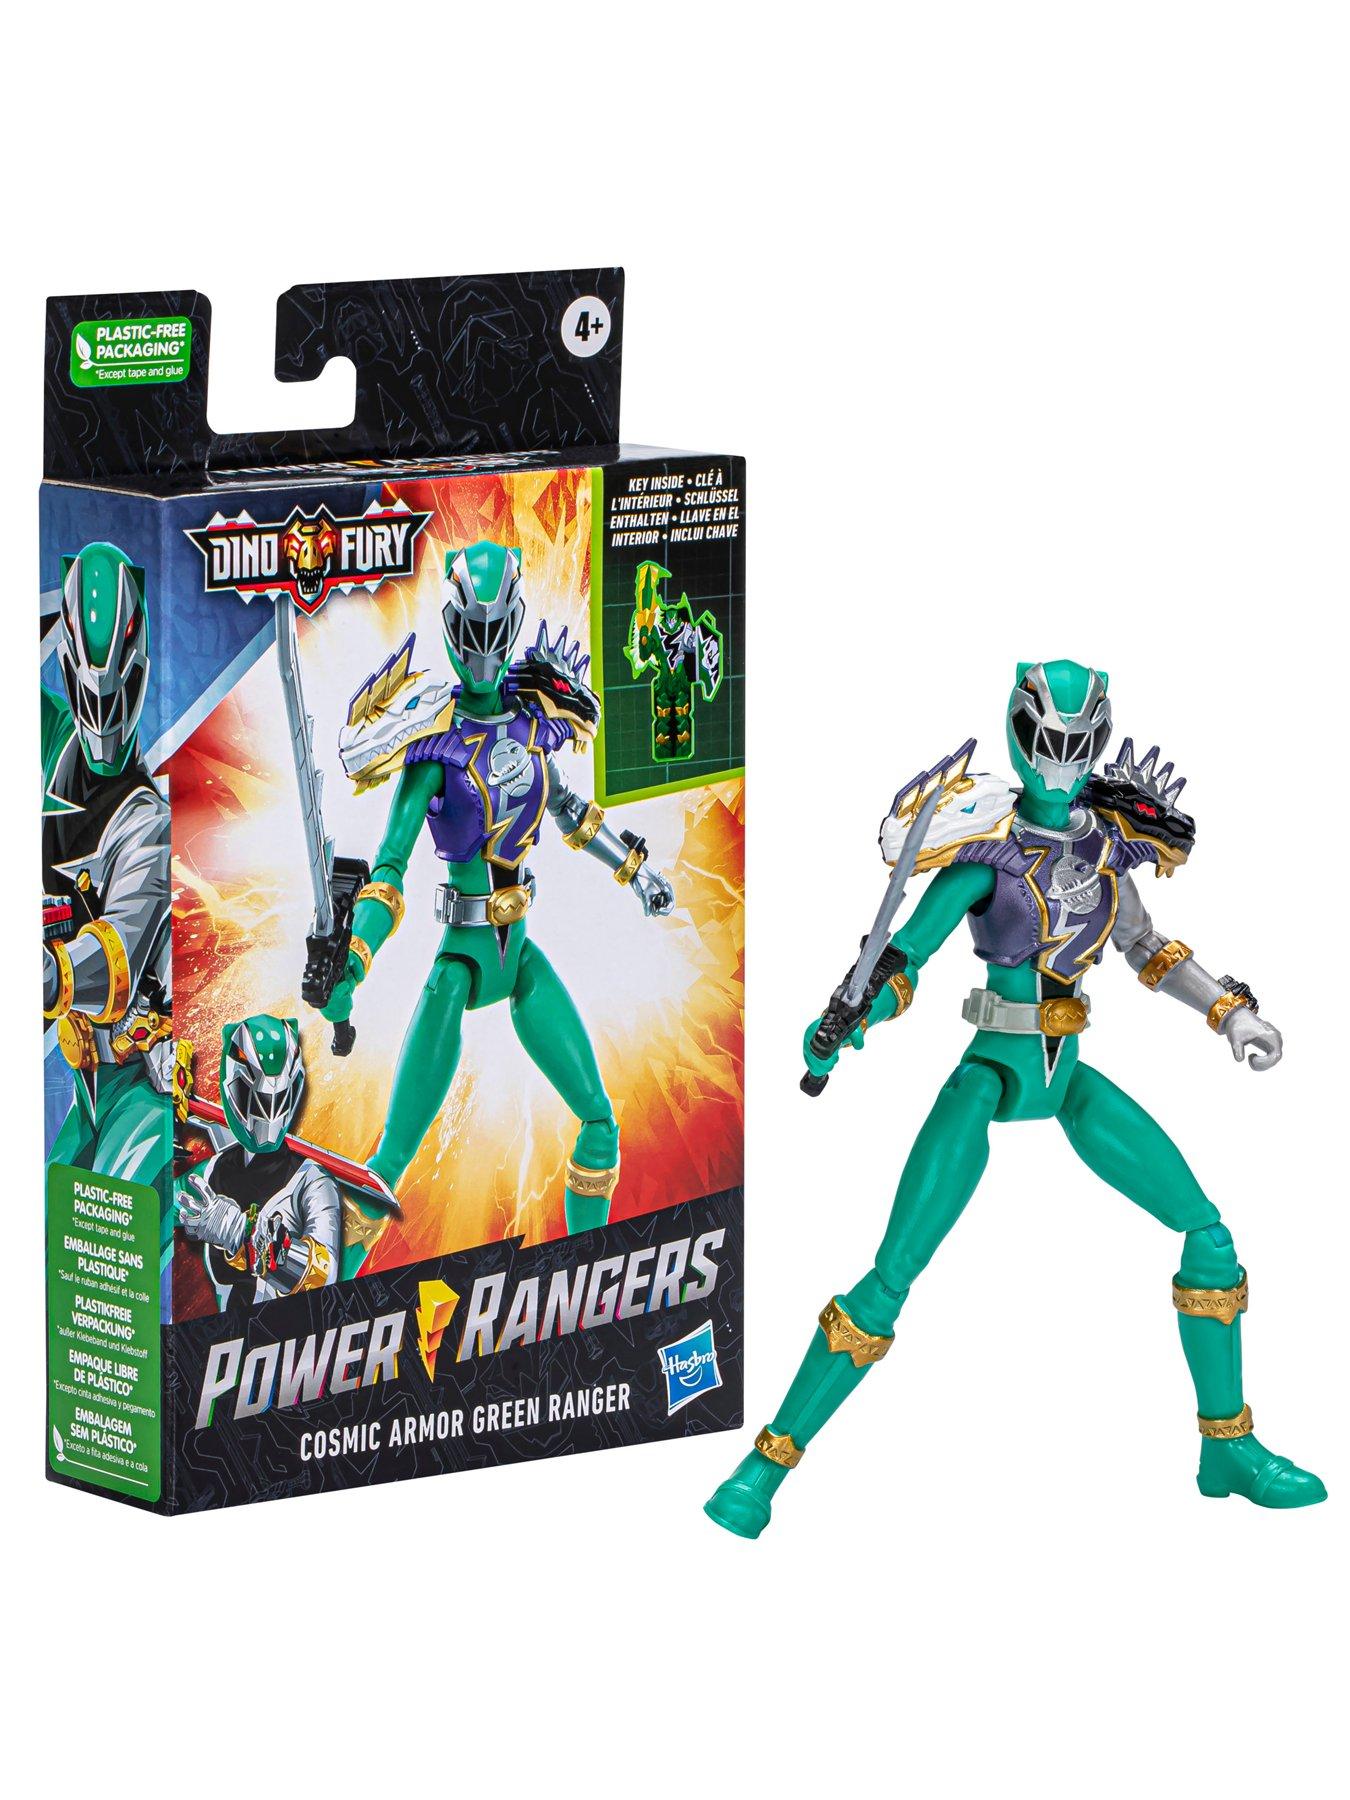 Mighty Morphin Power Rangers Green Ranger Mens Adult Underoos